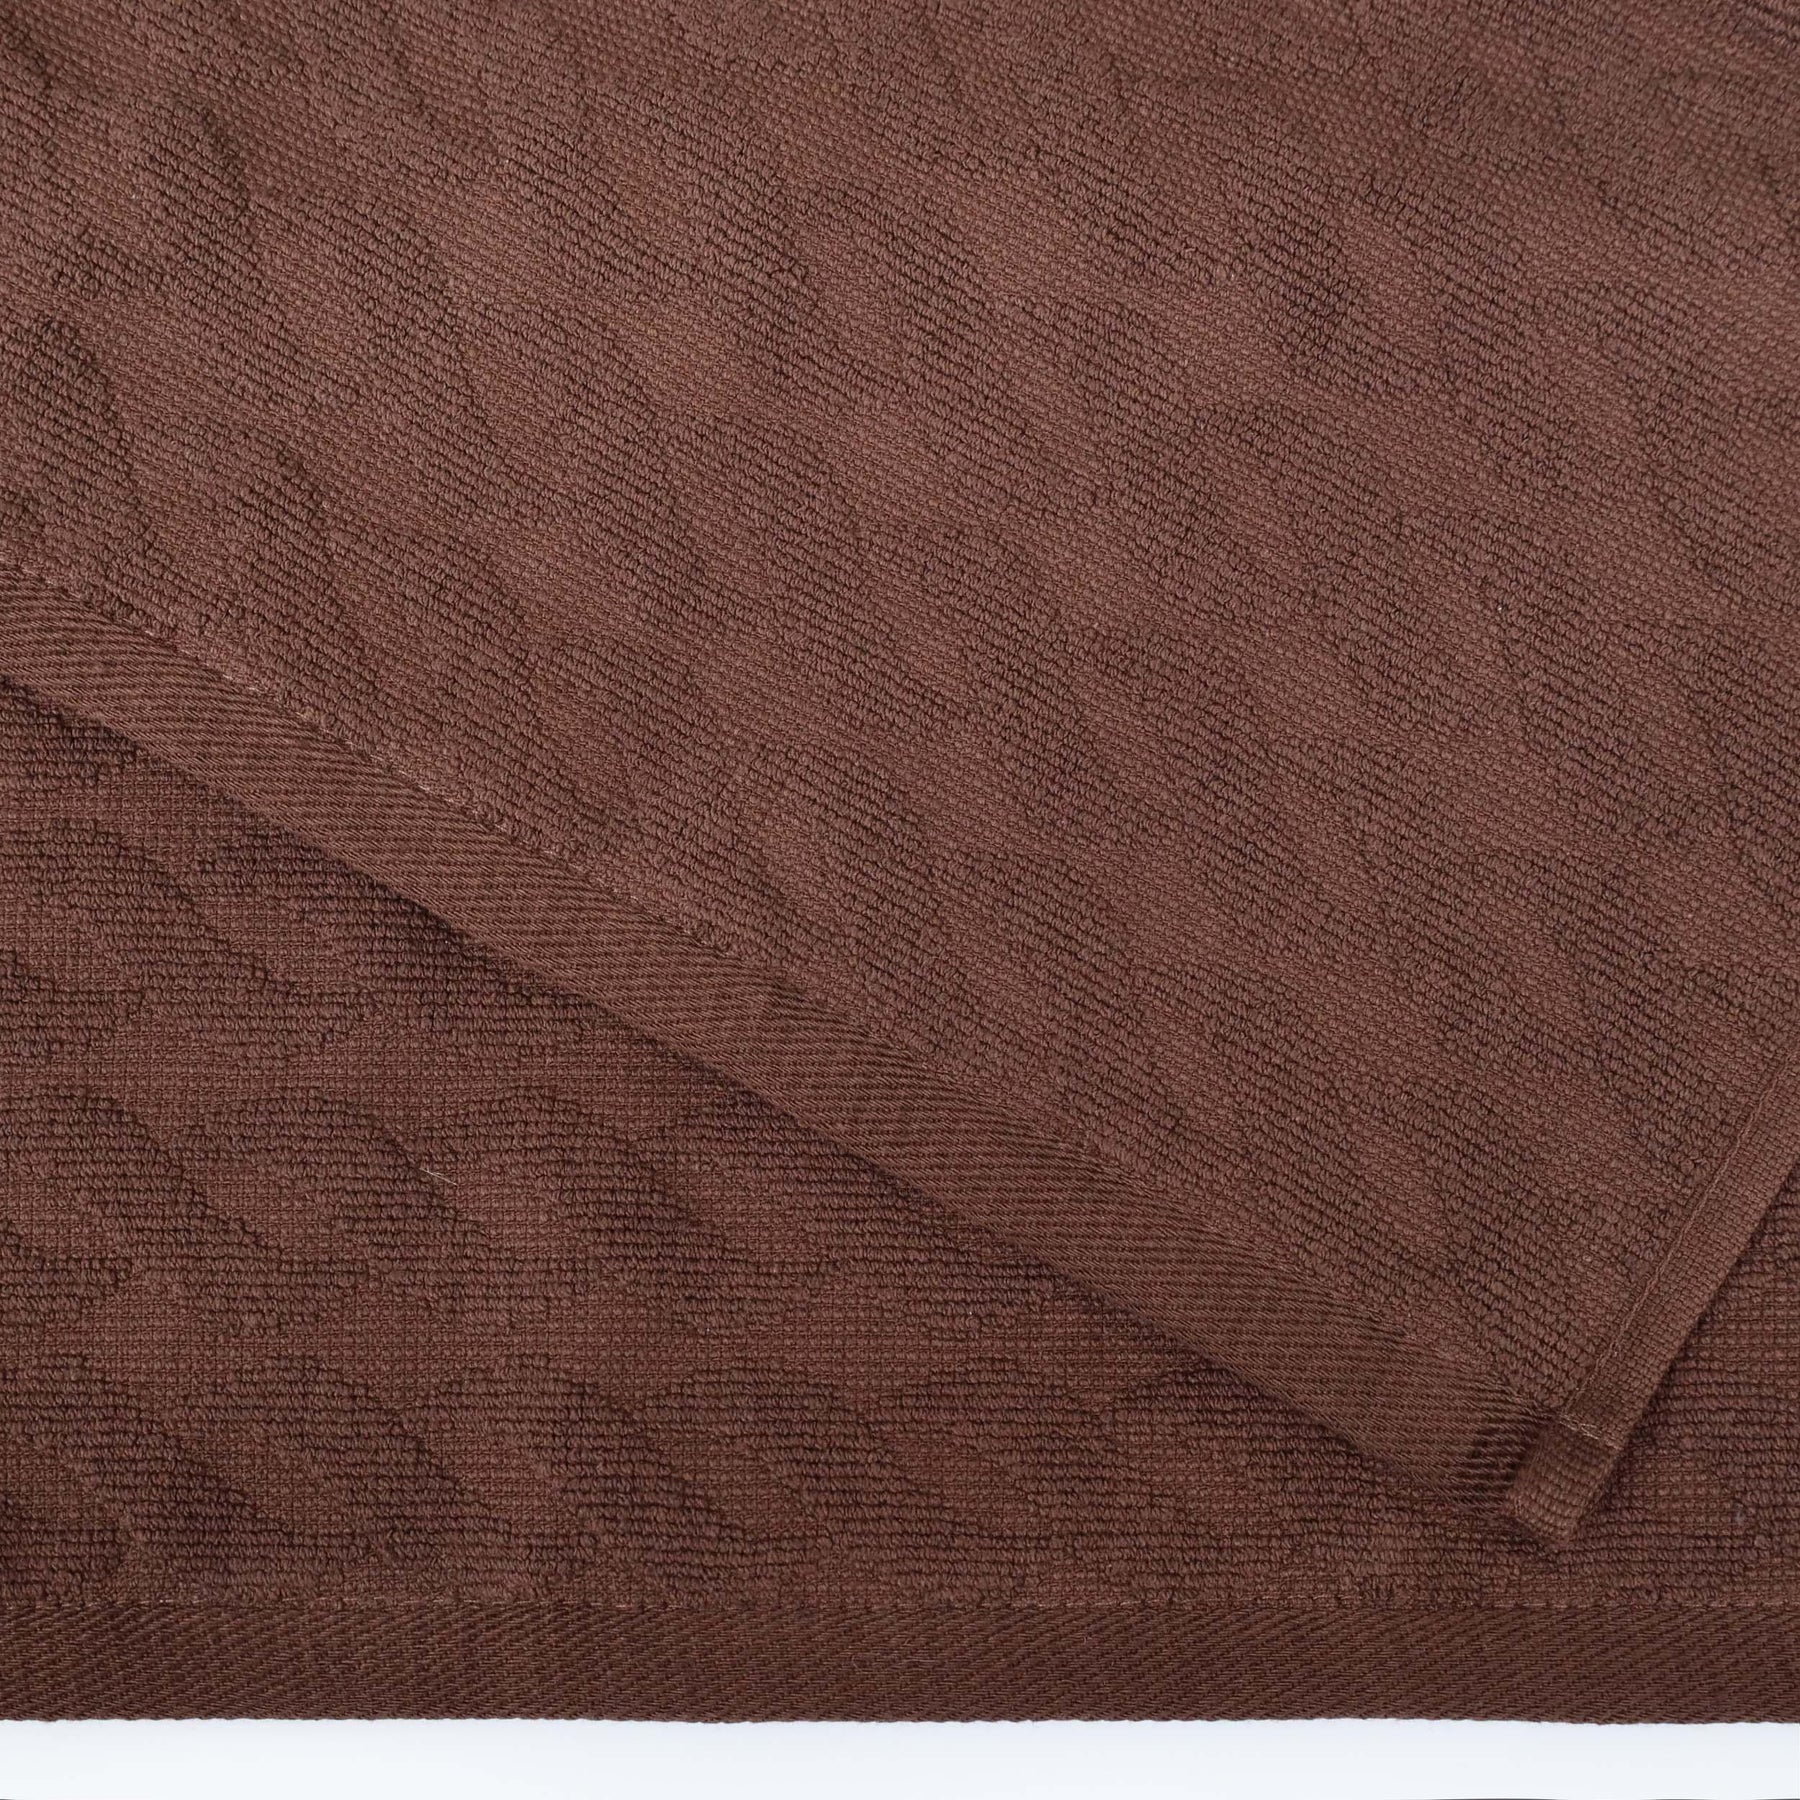 Premium Turkish Cotton Jacquard Herringbone and Solid 6-Piece Hand Towel Set -  Chocolate